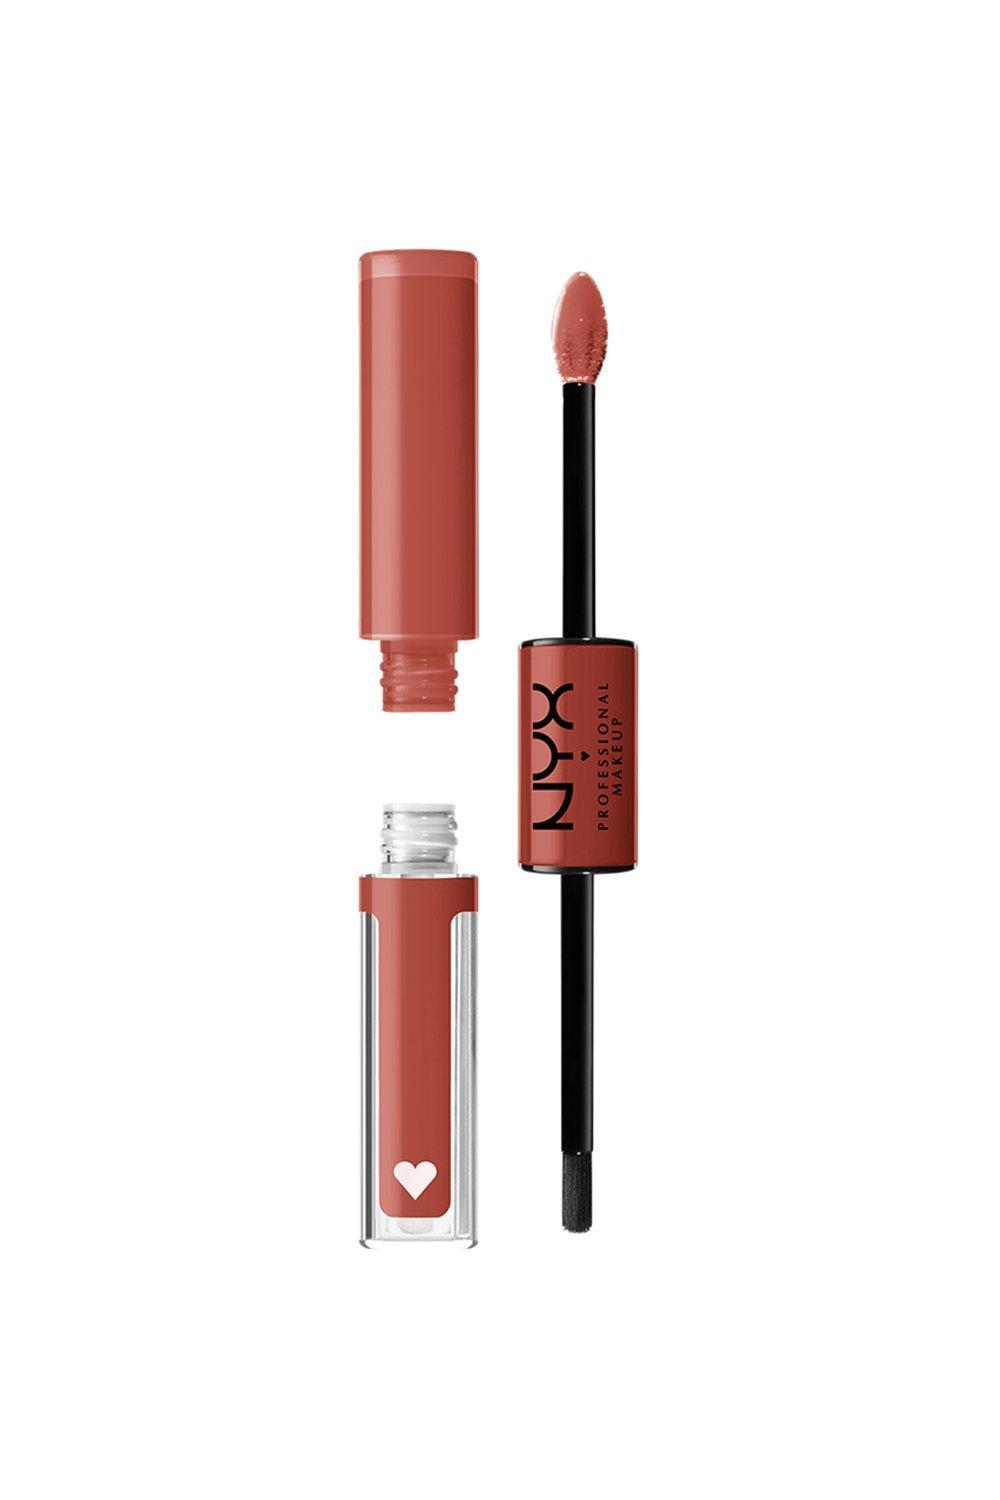 Nyx Professional Makeup Makeup Shine Loud High Pigment Long Lasting Lip Shine Lip Gloss|